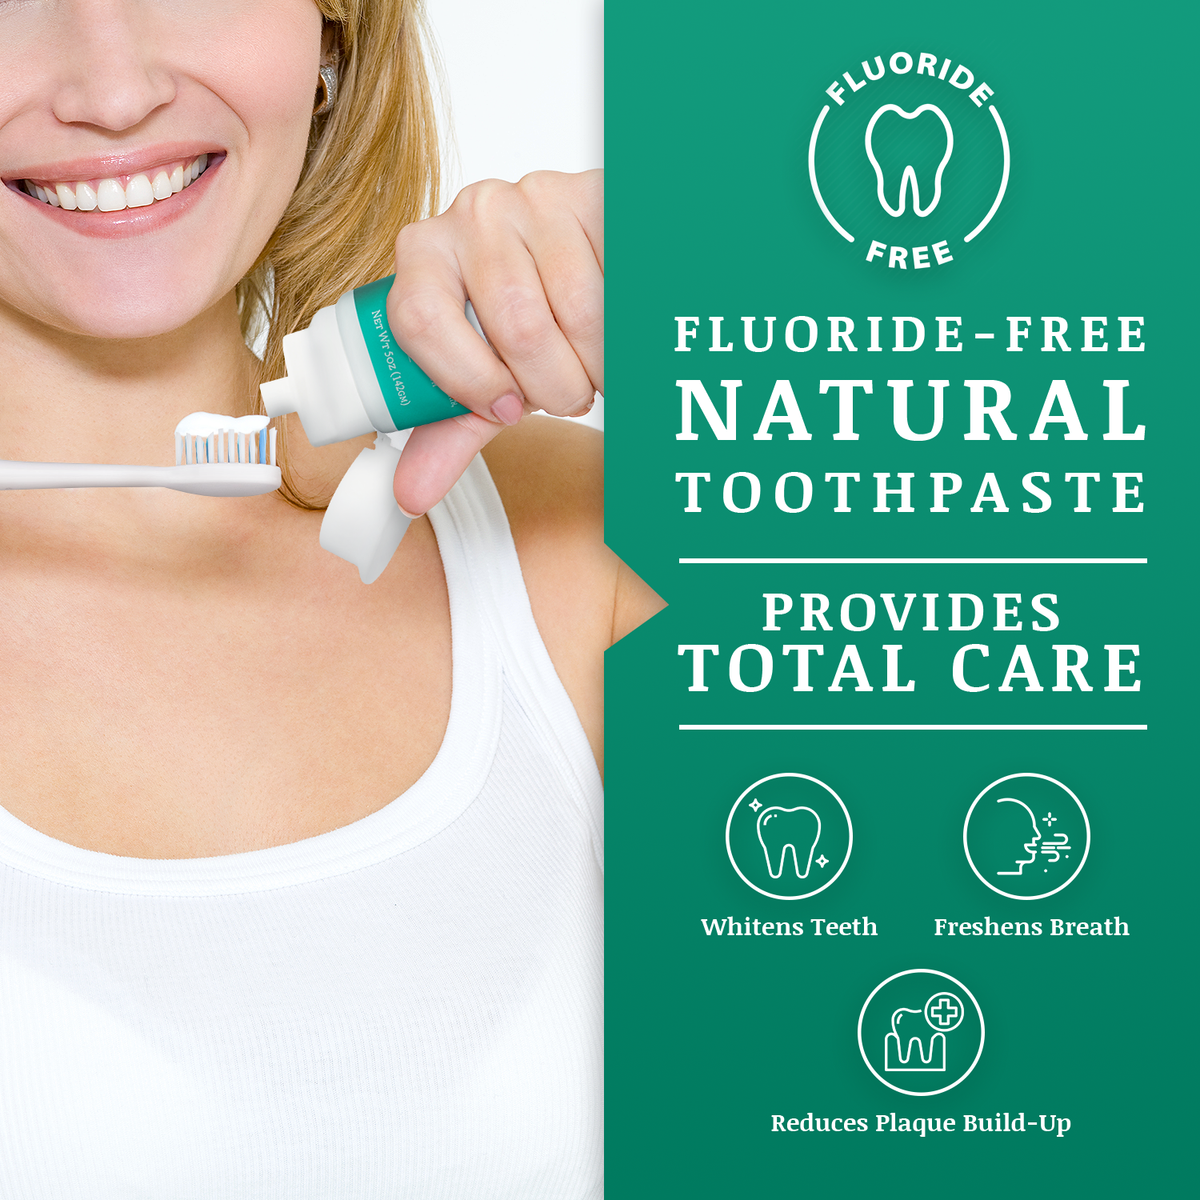 SprinJene Natural ® Total Care Fluoride Free Toothpaste